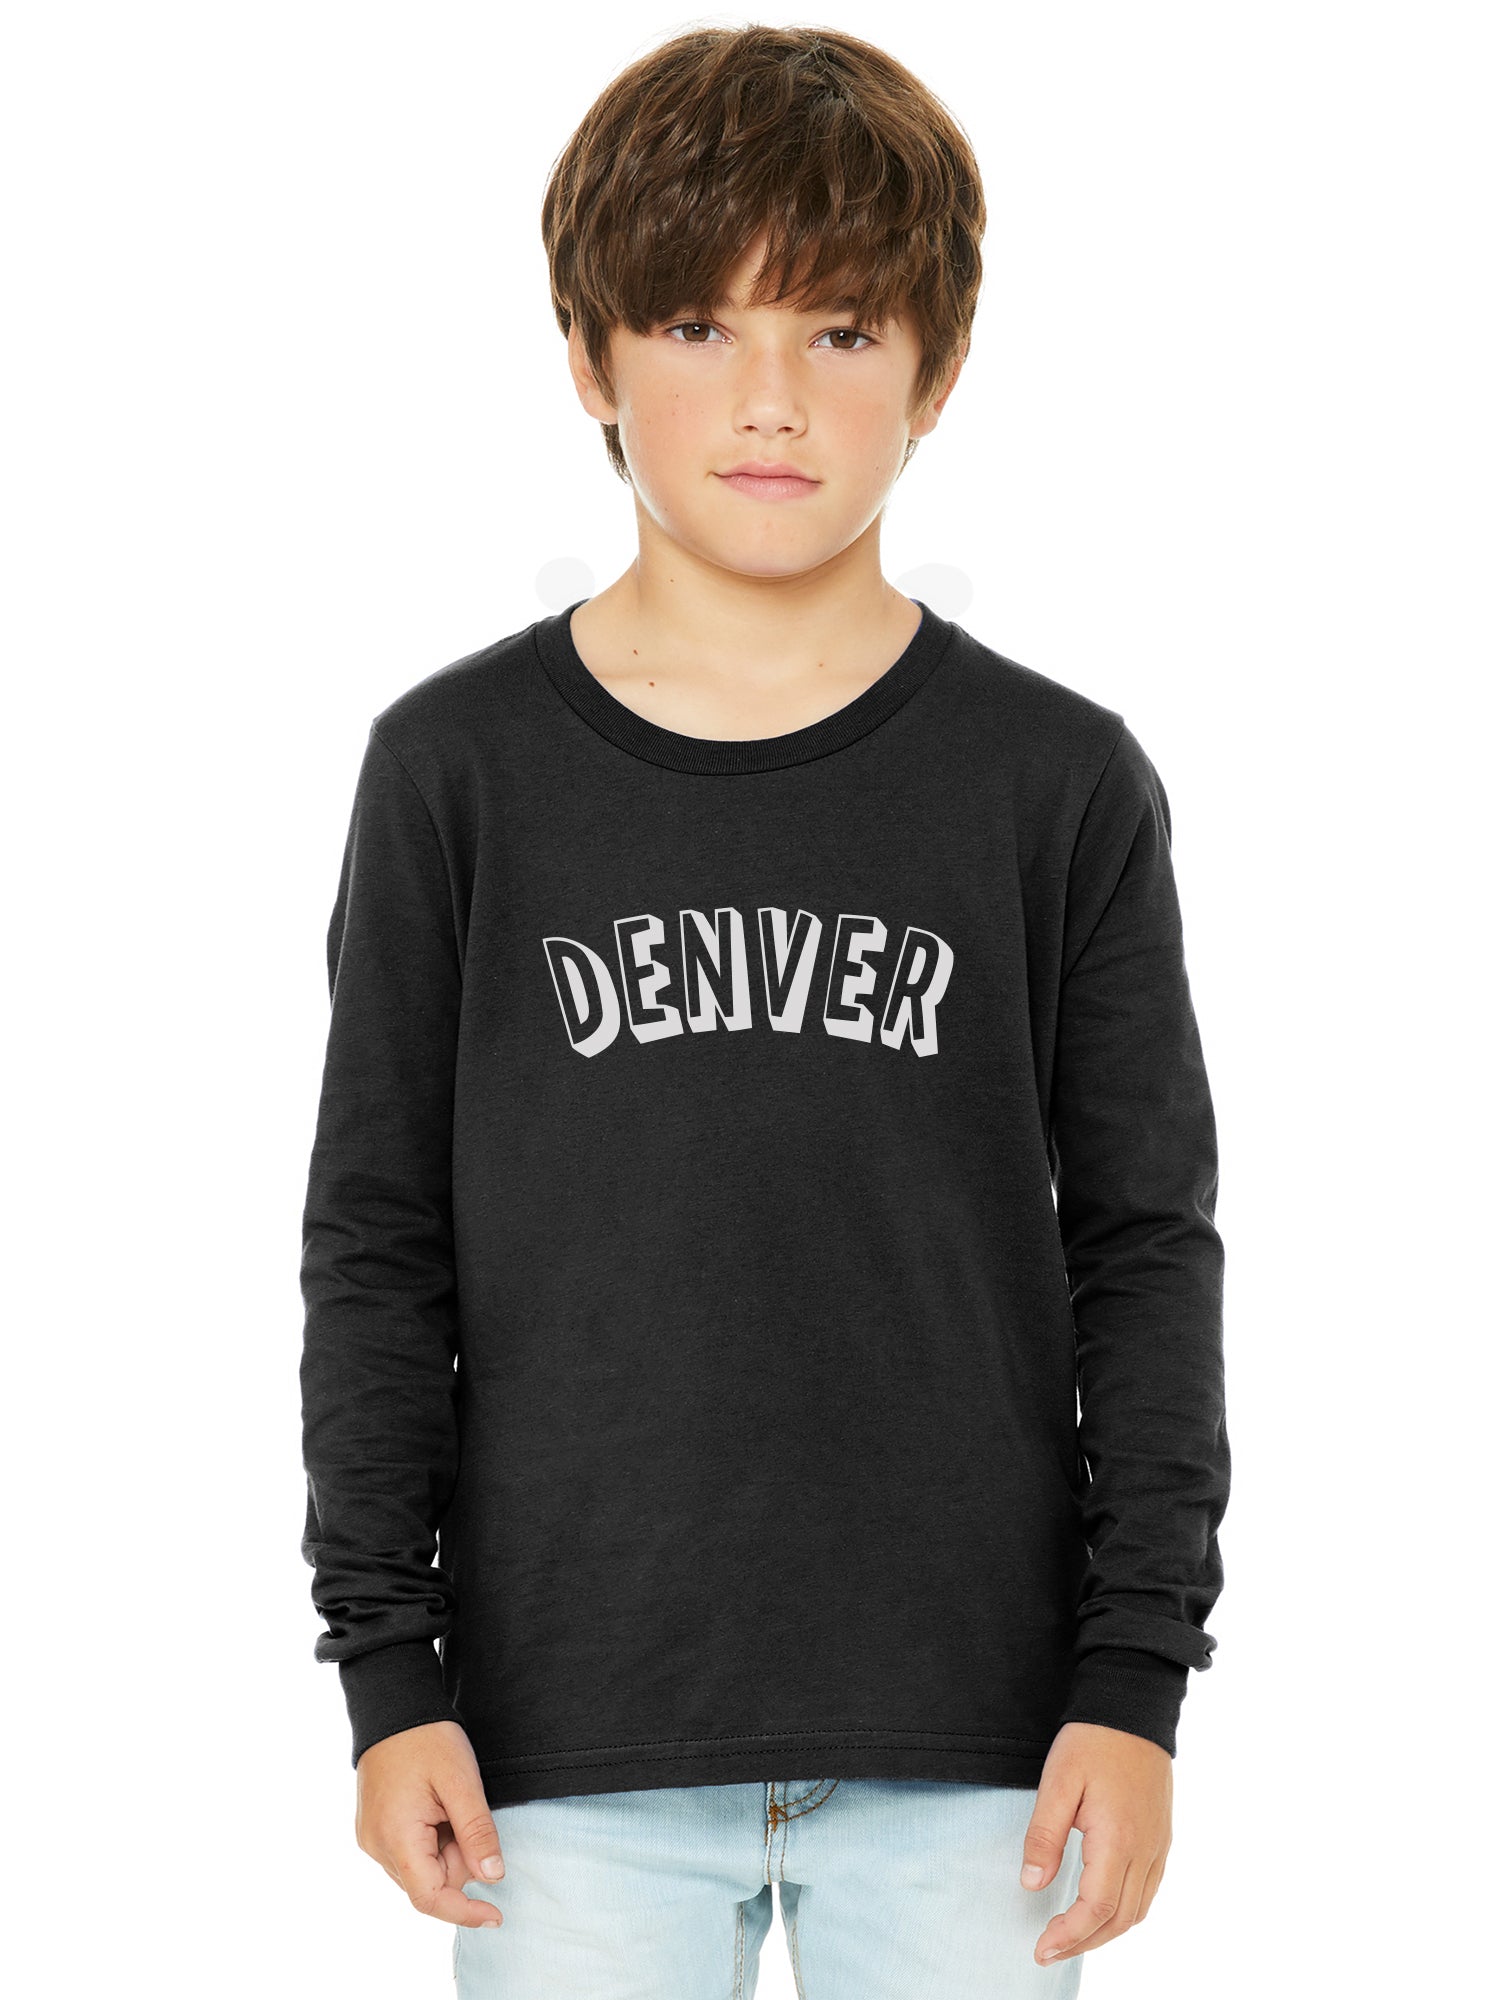 Denver Clothing